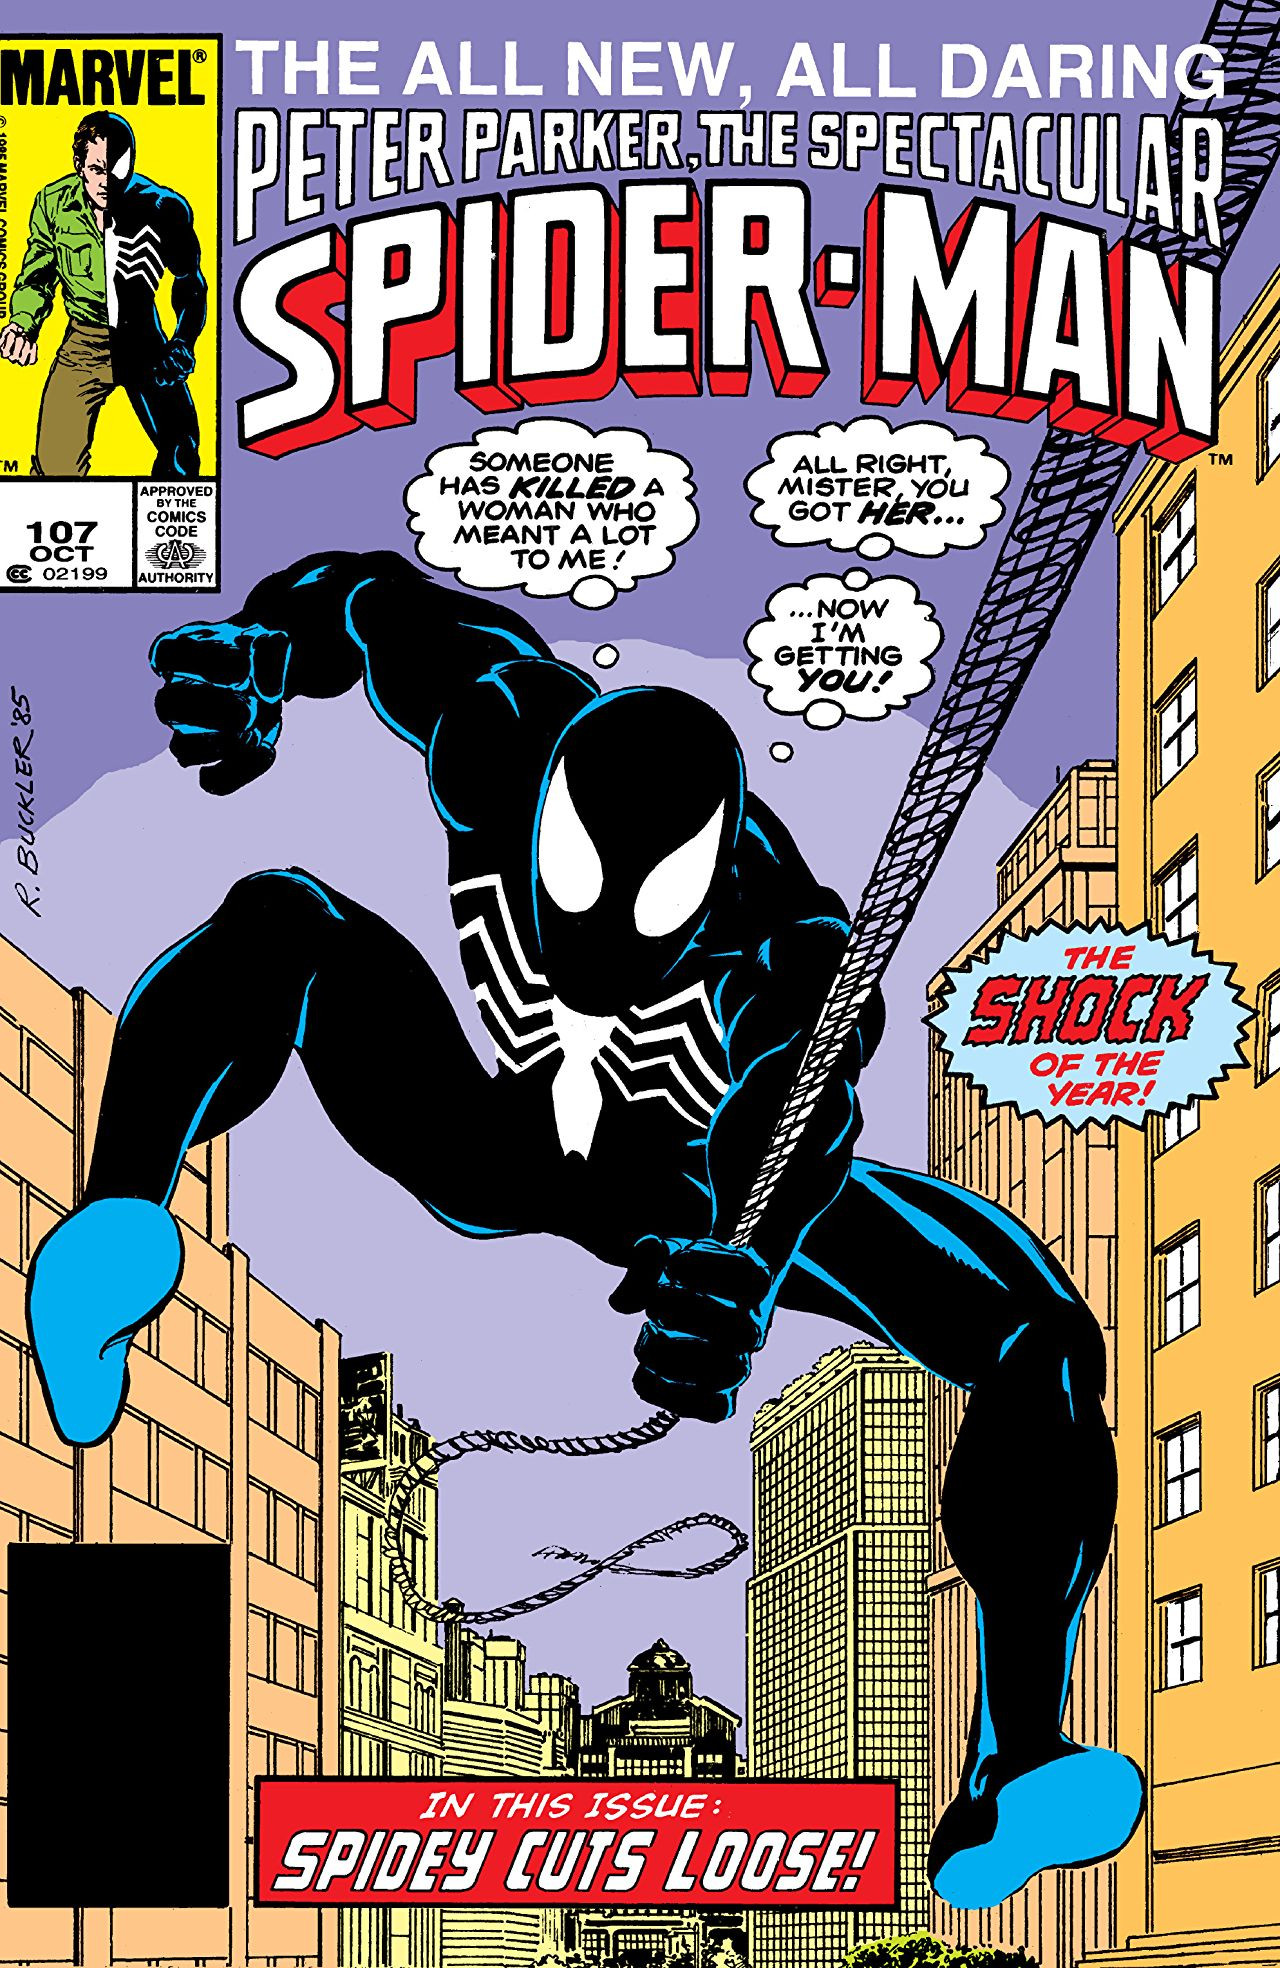 Peter Parker The Spectacular Spider Man Movie